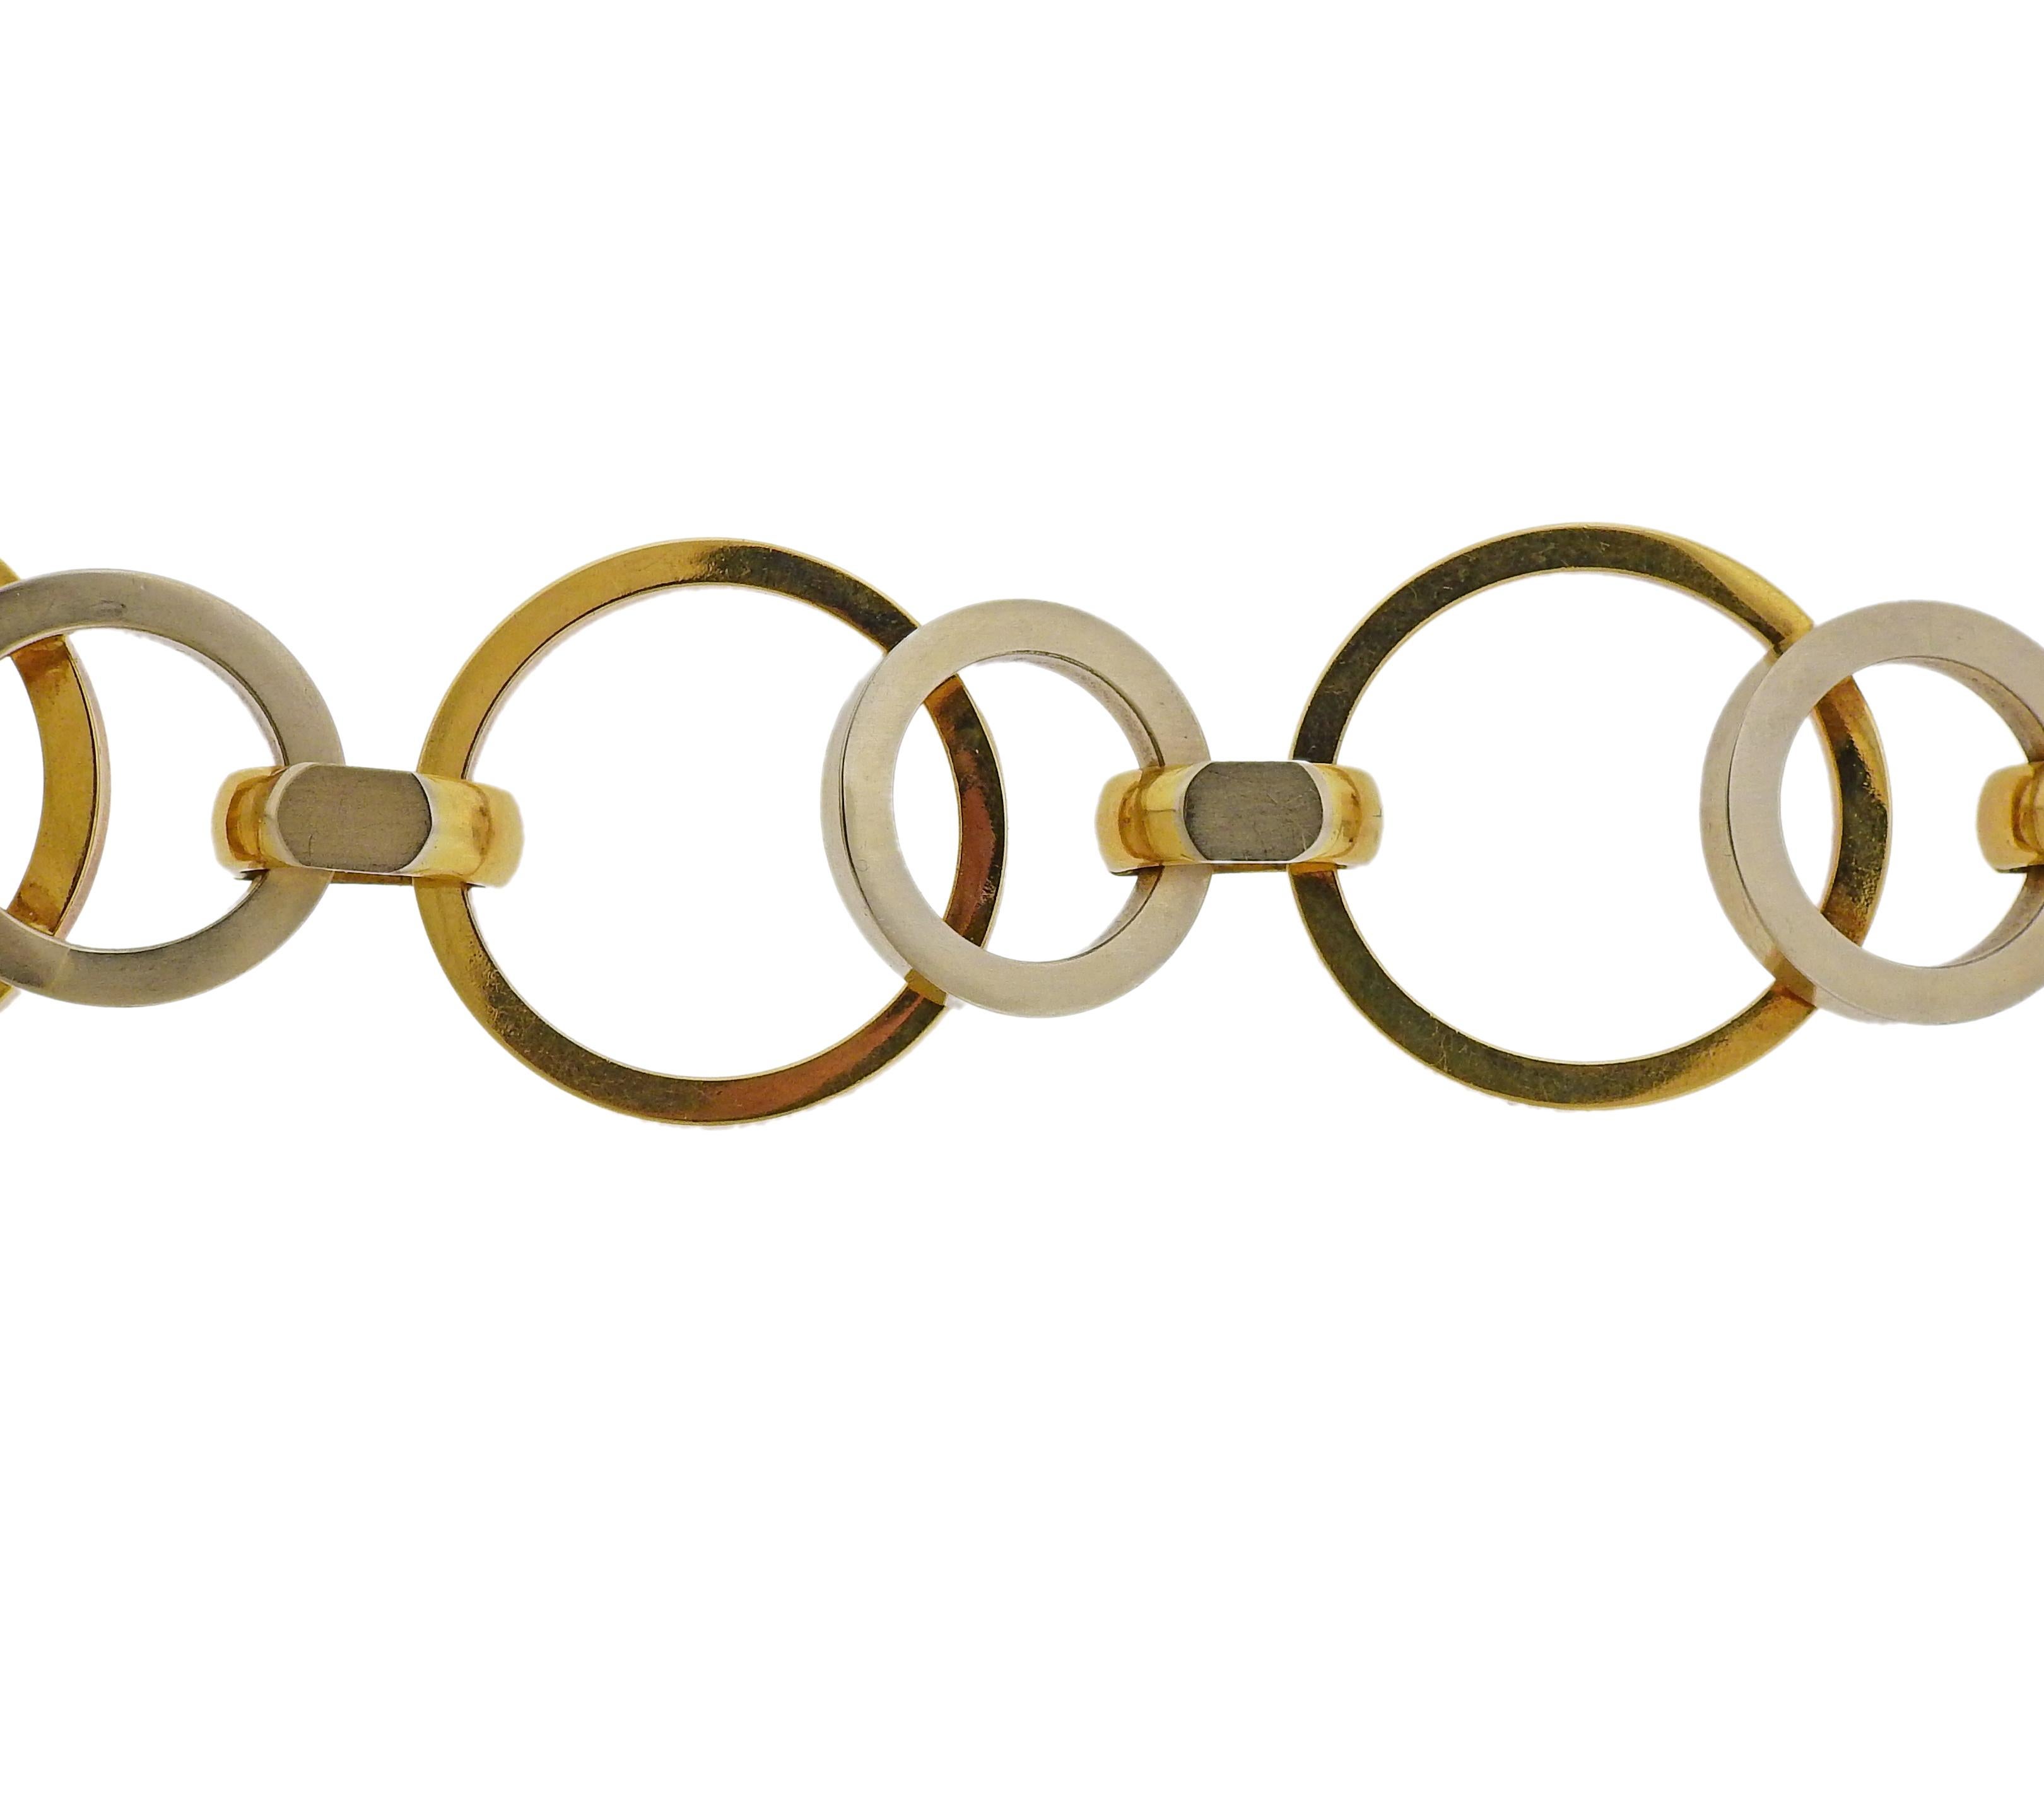 Italian 18k gold multi circle link bracelet by UnoAErre. Measuring 8